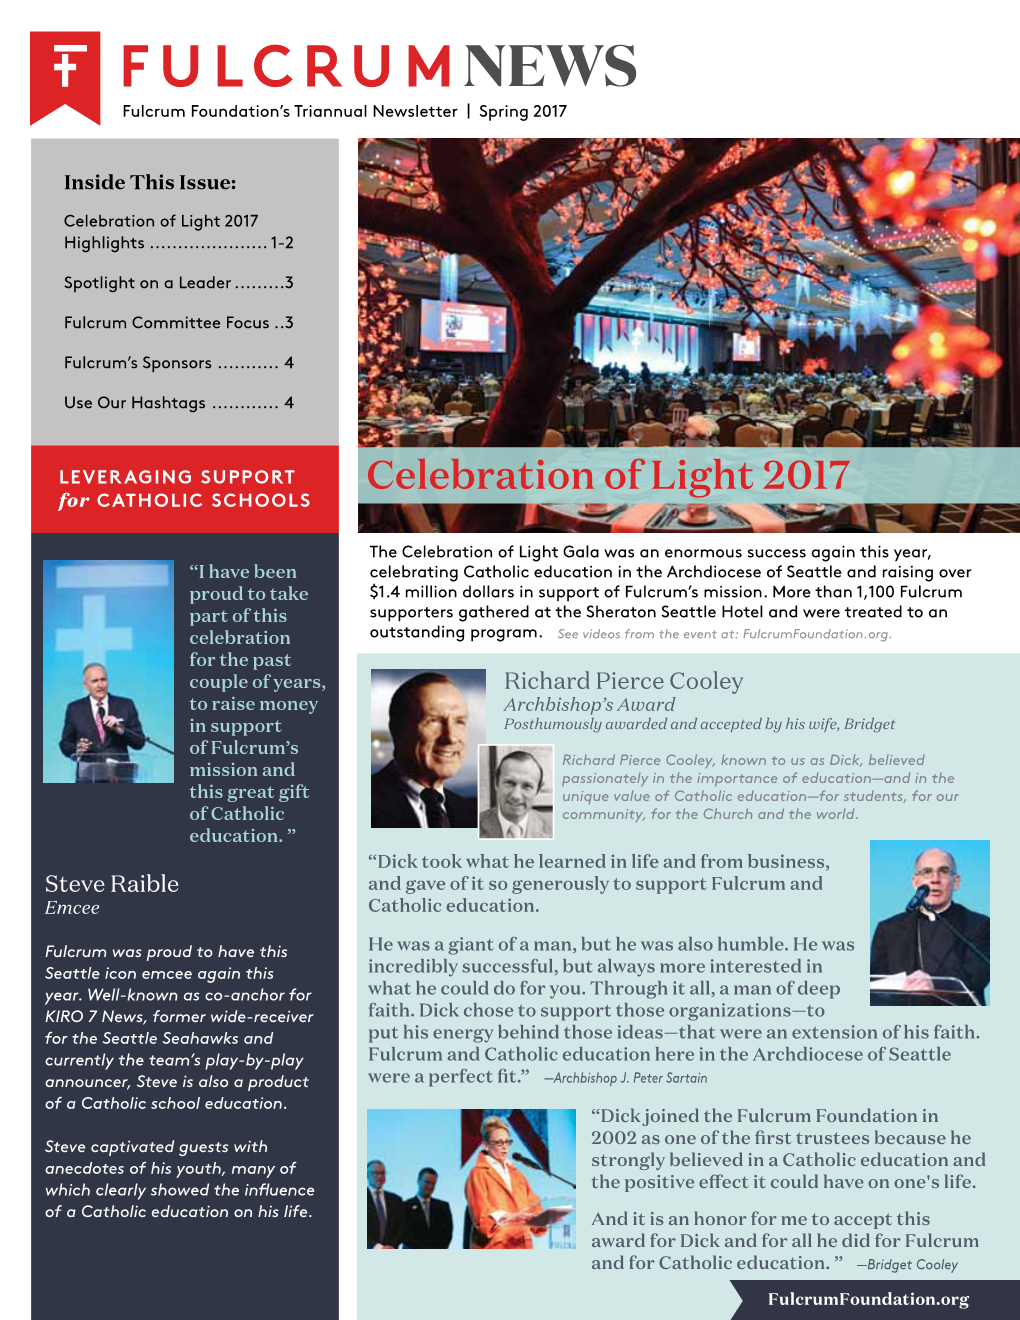 Celebration of Light 2017 Highlights